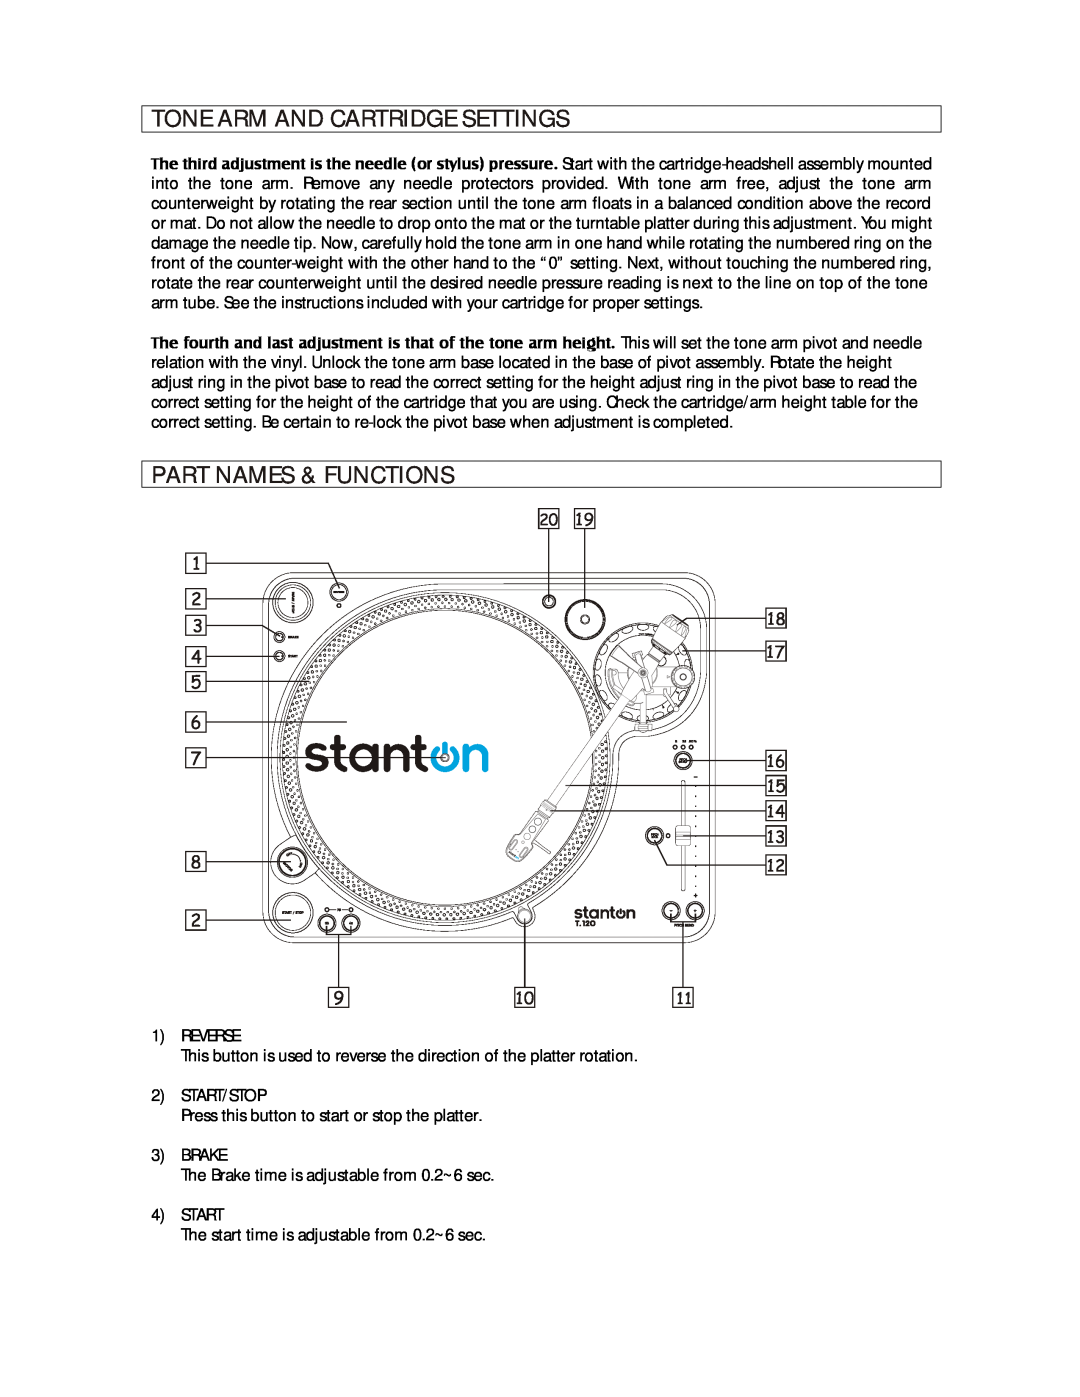 Stanton T.12O manual Part Names & Functions, Tone Arm And Cartridge Settings, 1 2, 18 17 16, 1REVERSE, 2START/STOP, 3BRAKE 